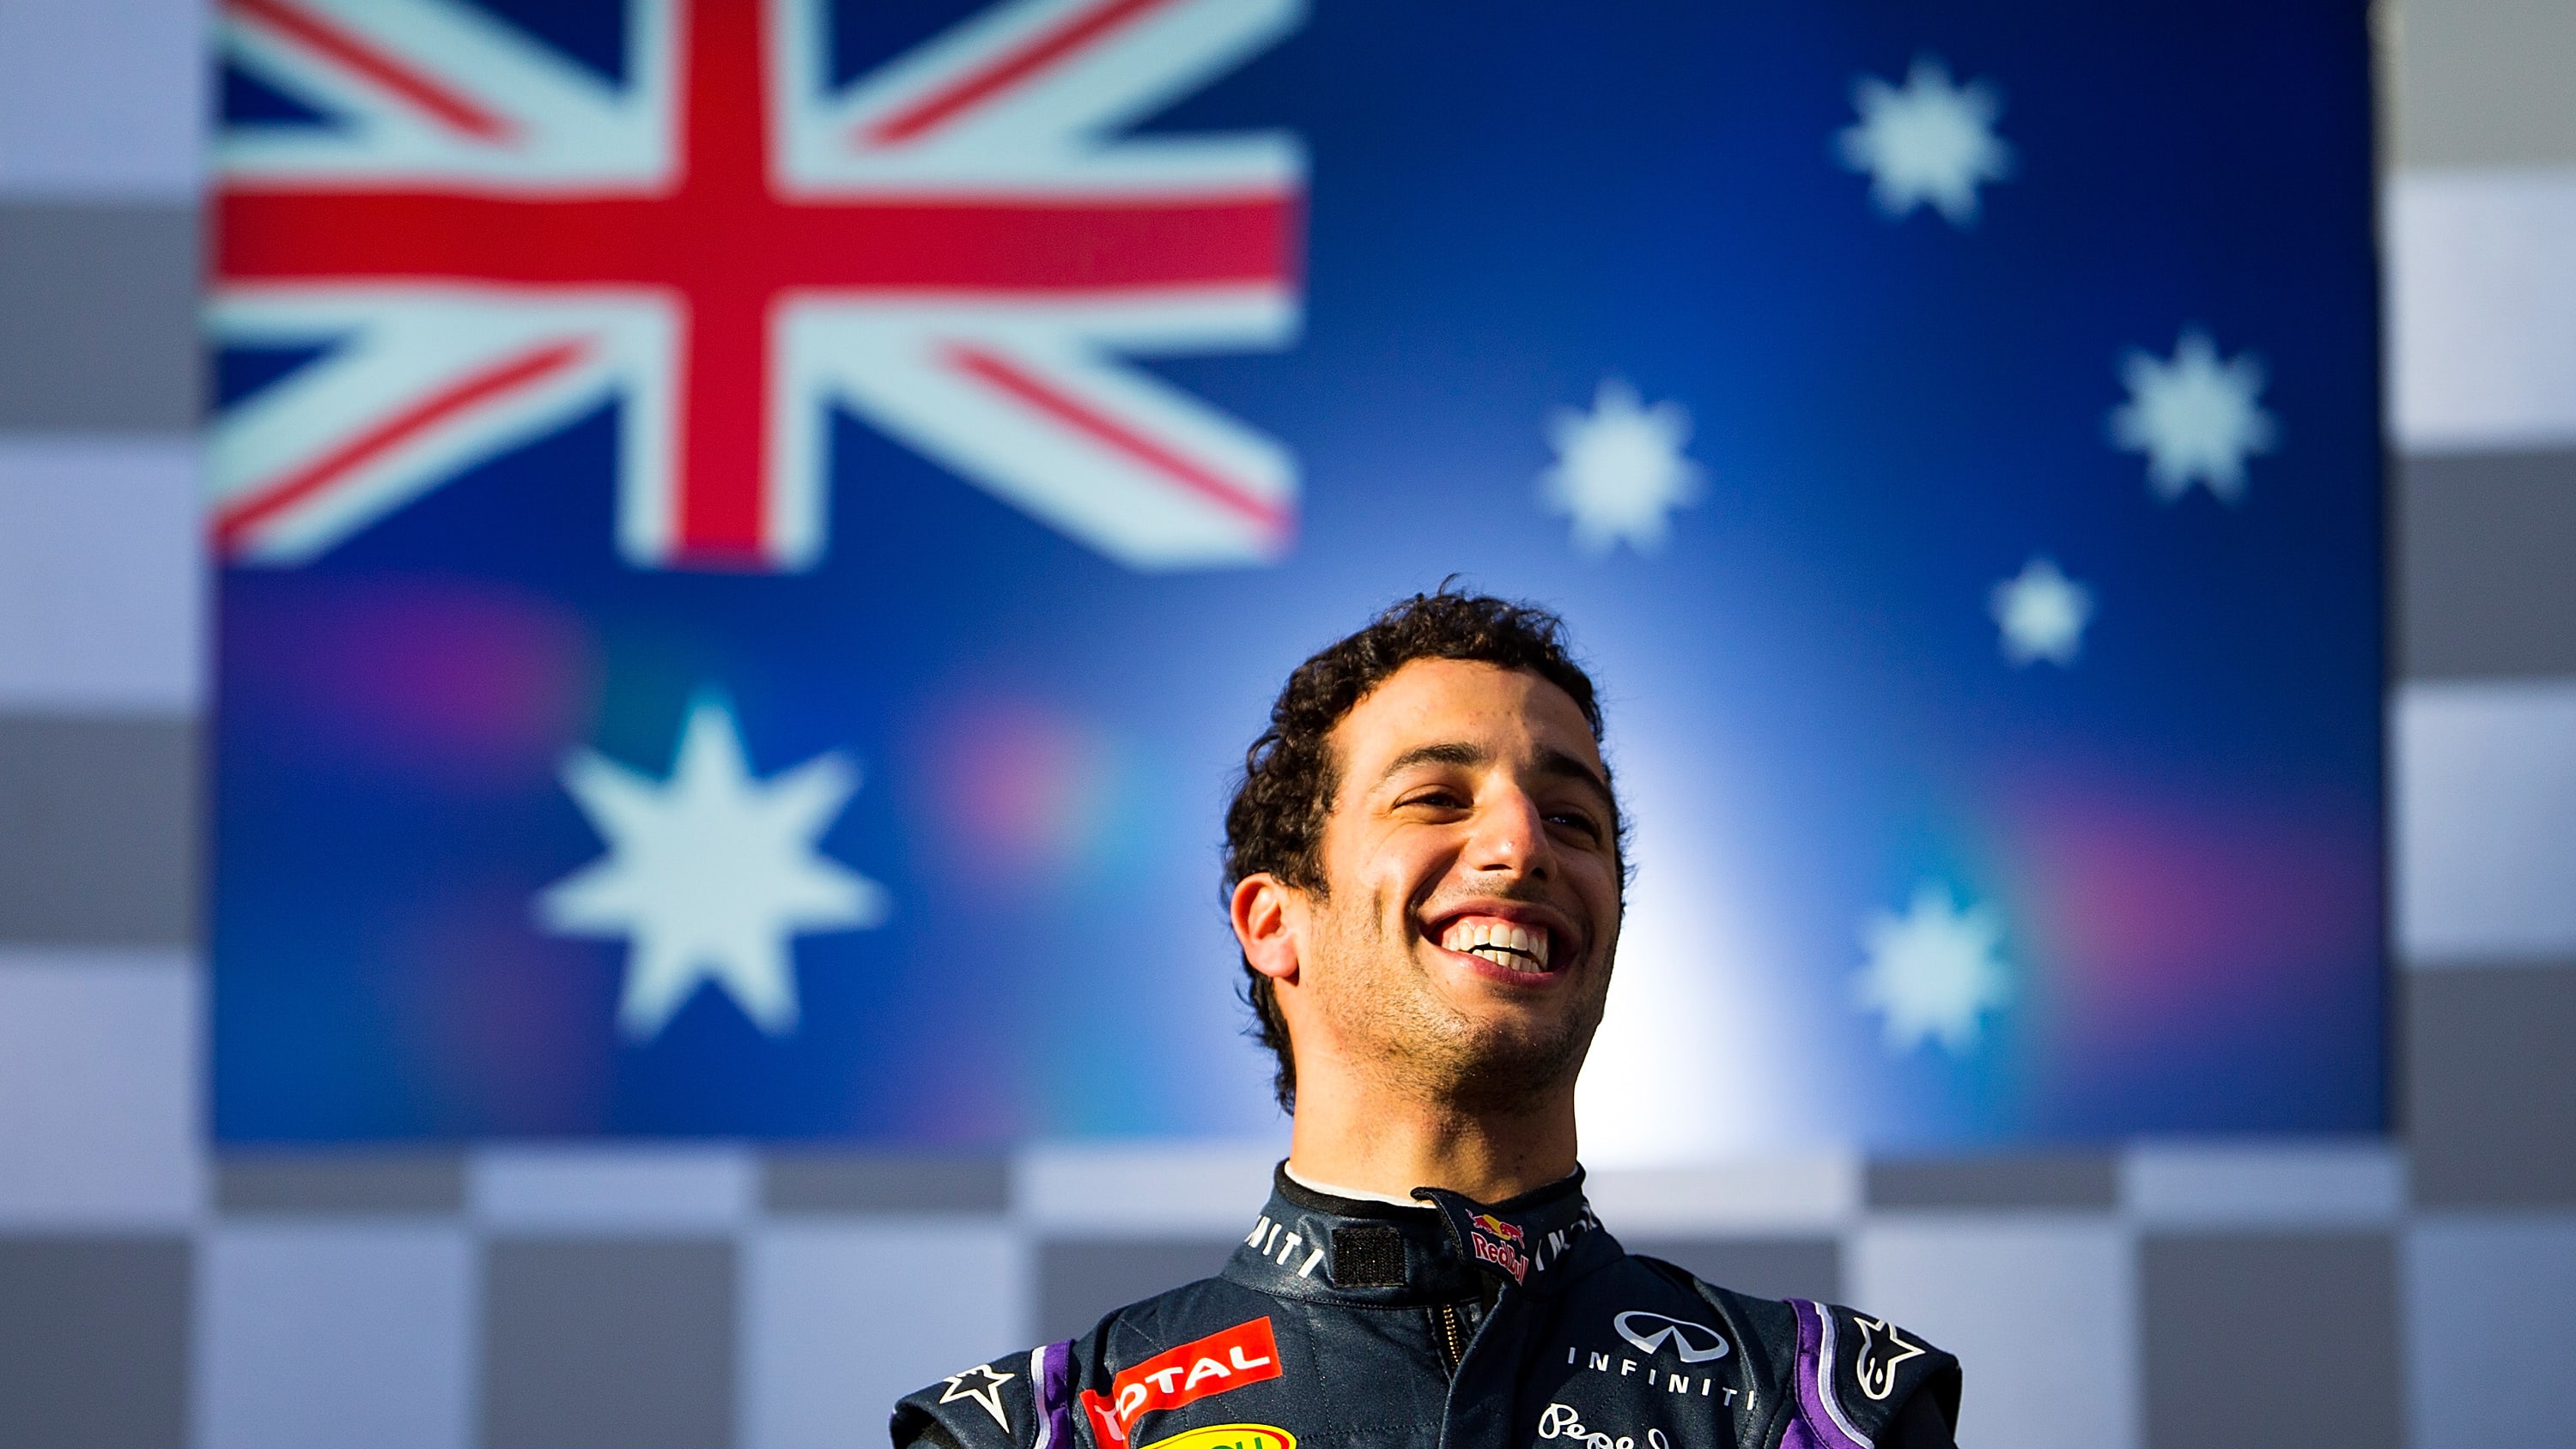 MELBOURNE, AUSTRALIA - MARCH 23: Daniel Ricciardo of Australia and Visa Cash App RB greets fans on